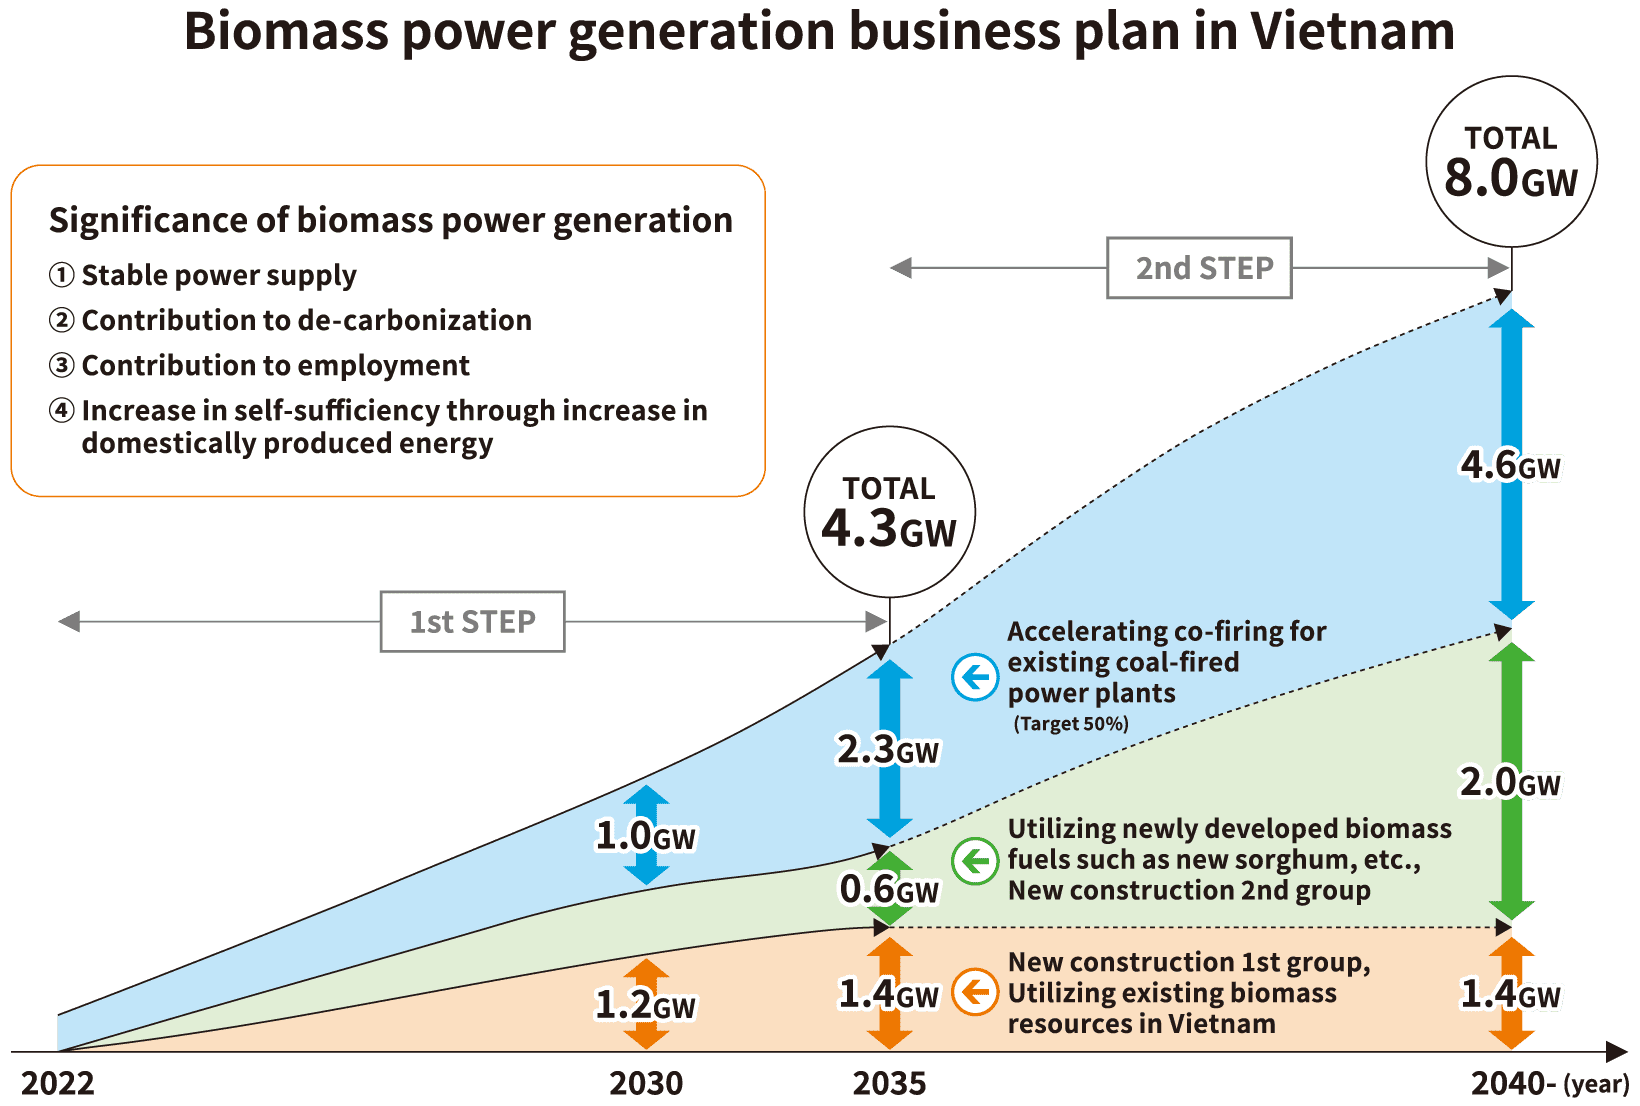 image:Biomass power generation business plan in Vietnam